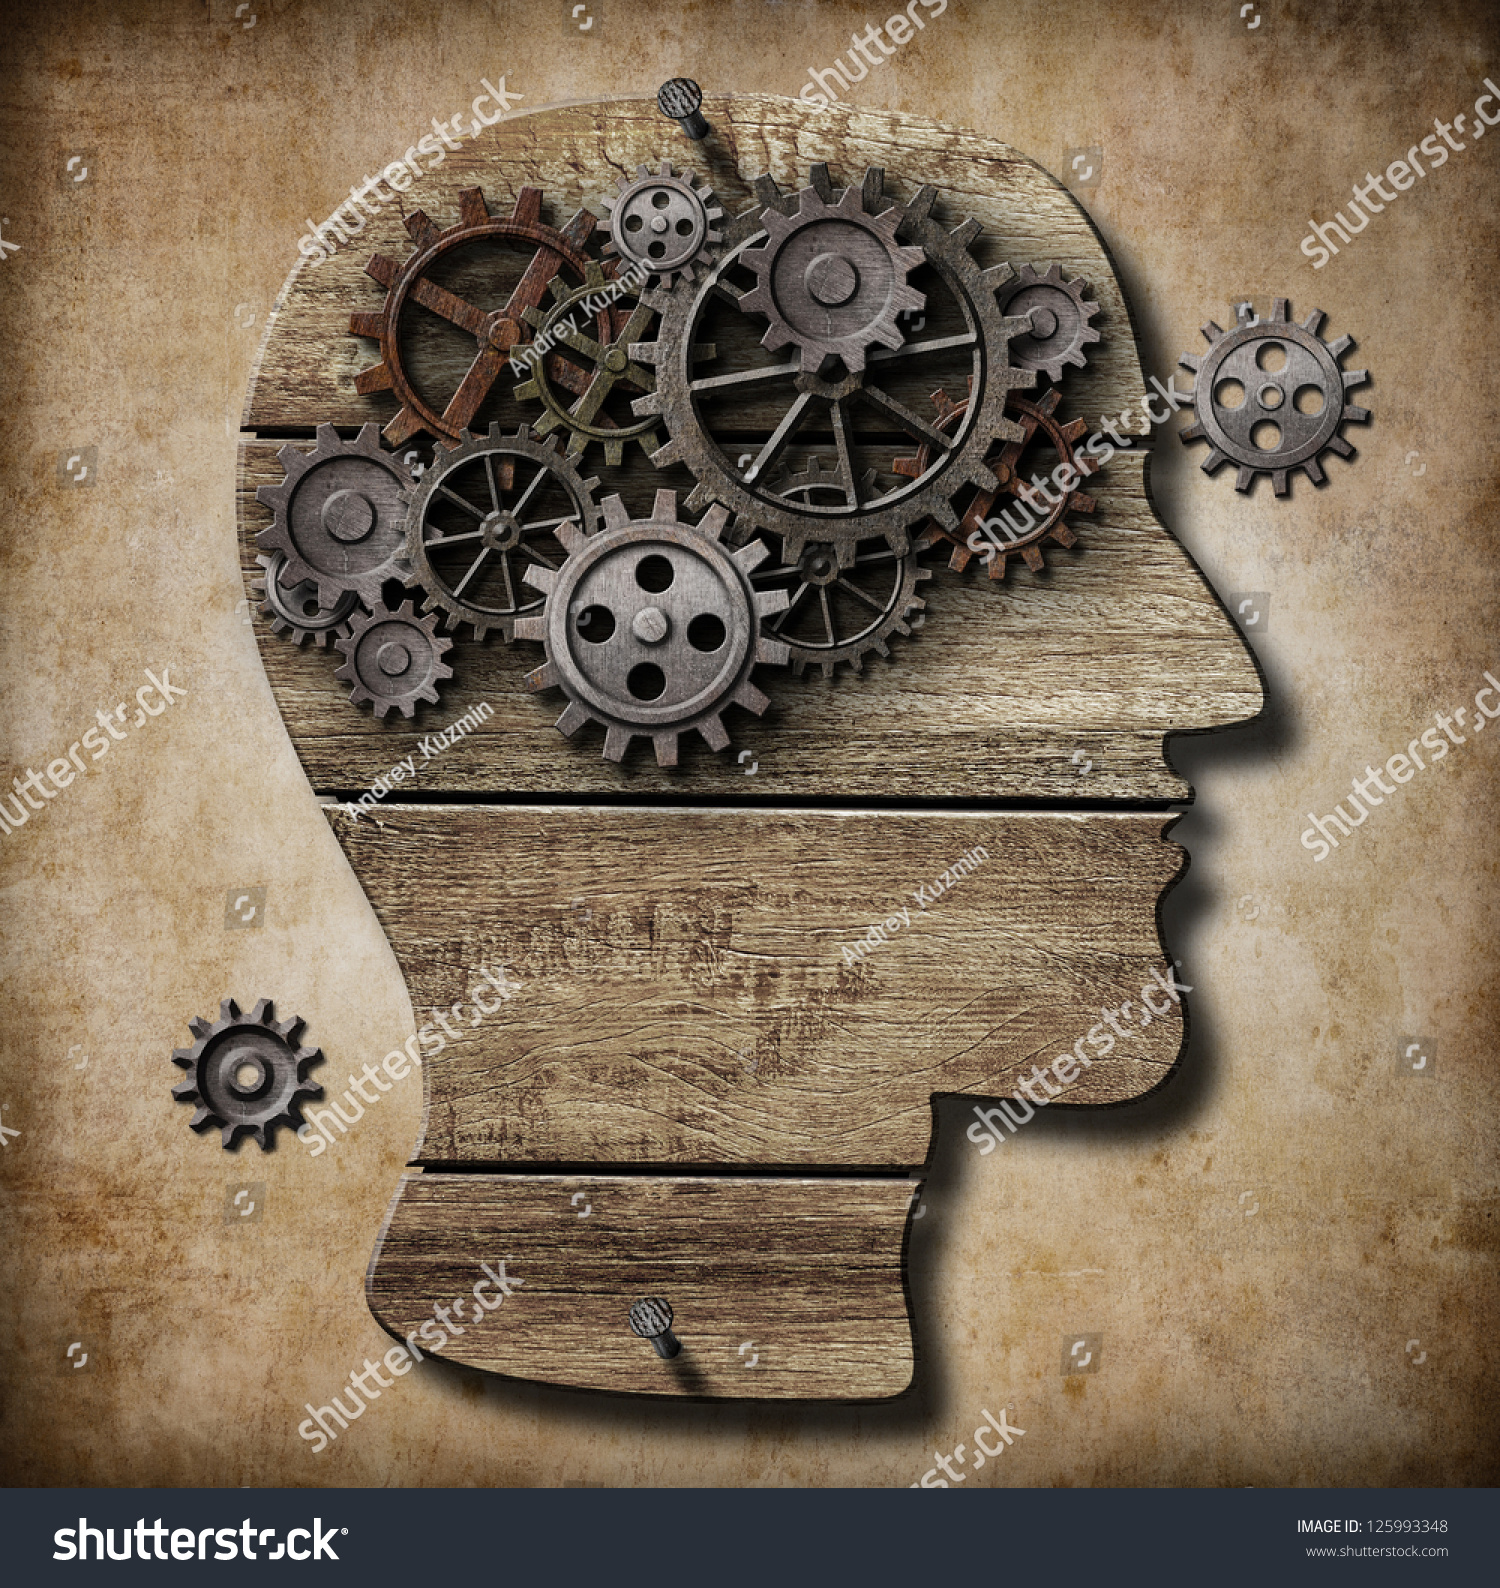 Human Brain Work Metaphor Made Rusty Stock Illustration 125993348 ...